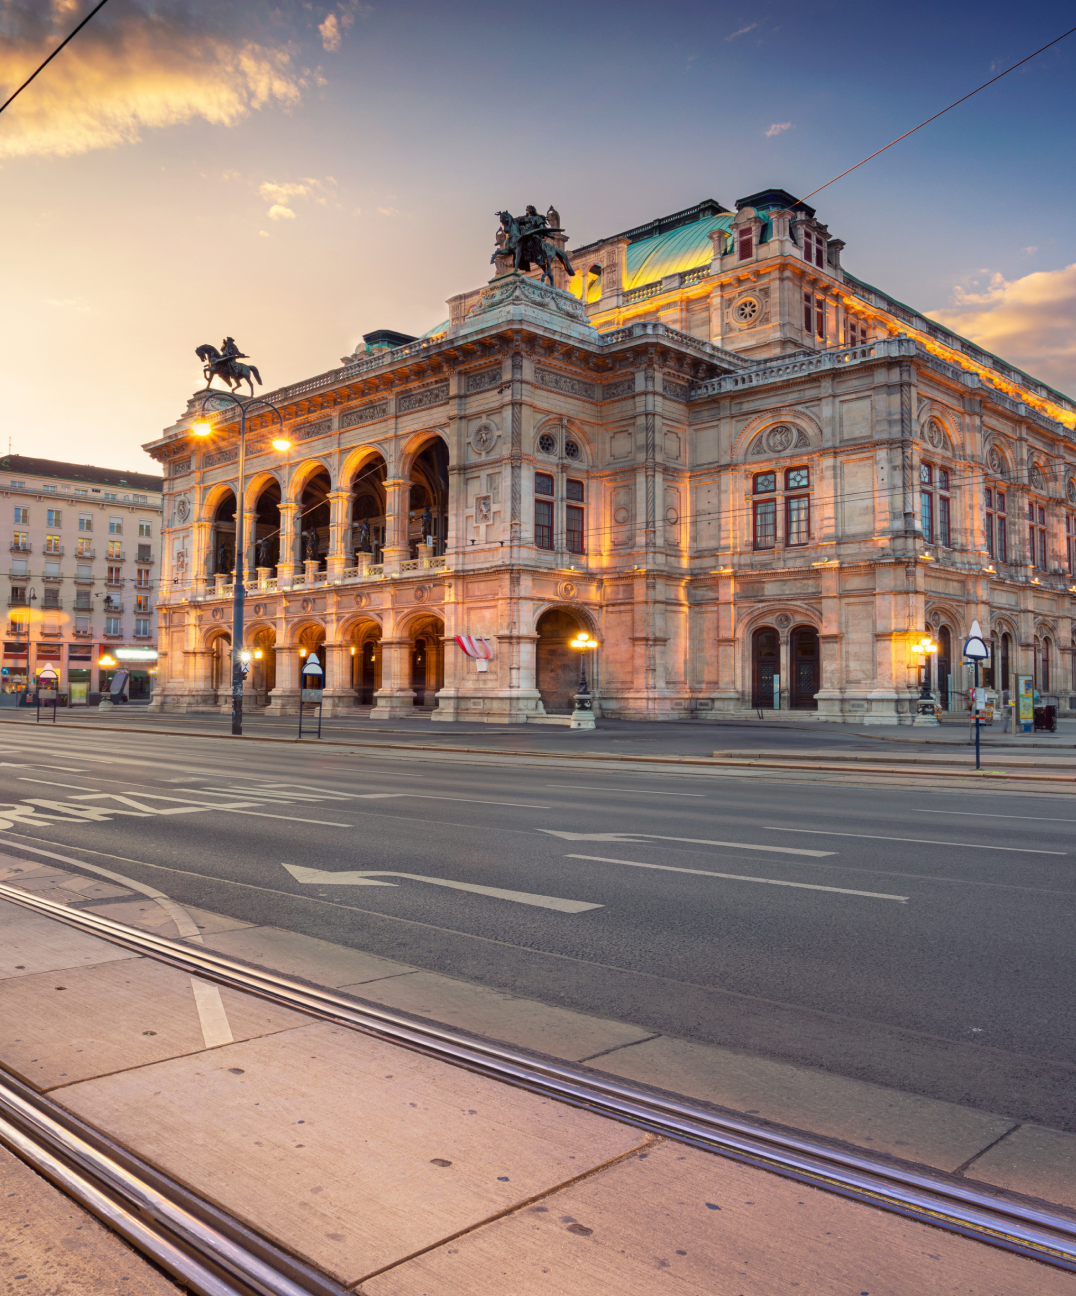 Buildings in Austria Vienna